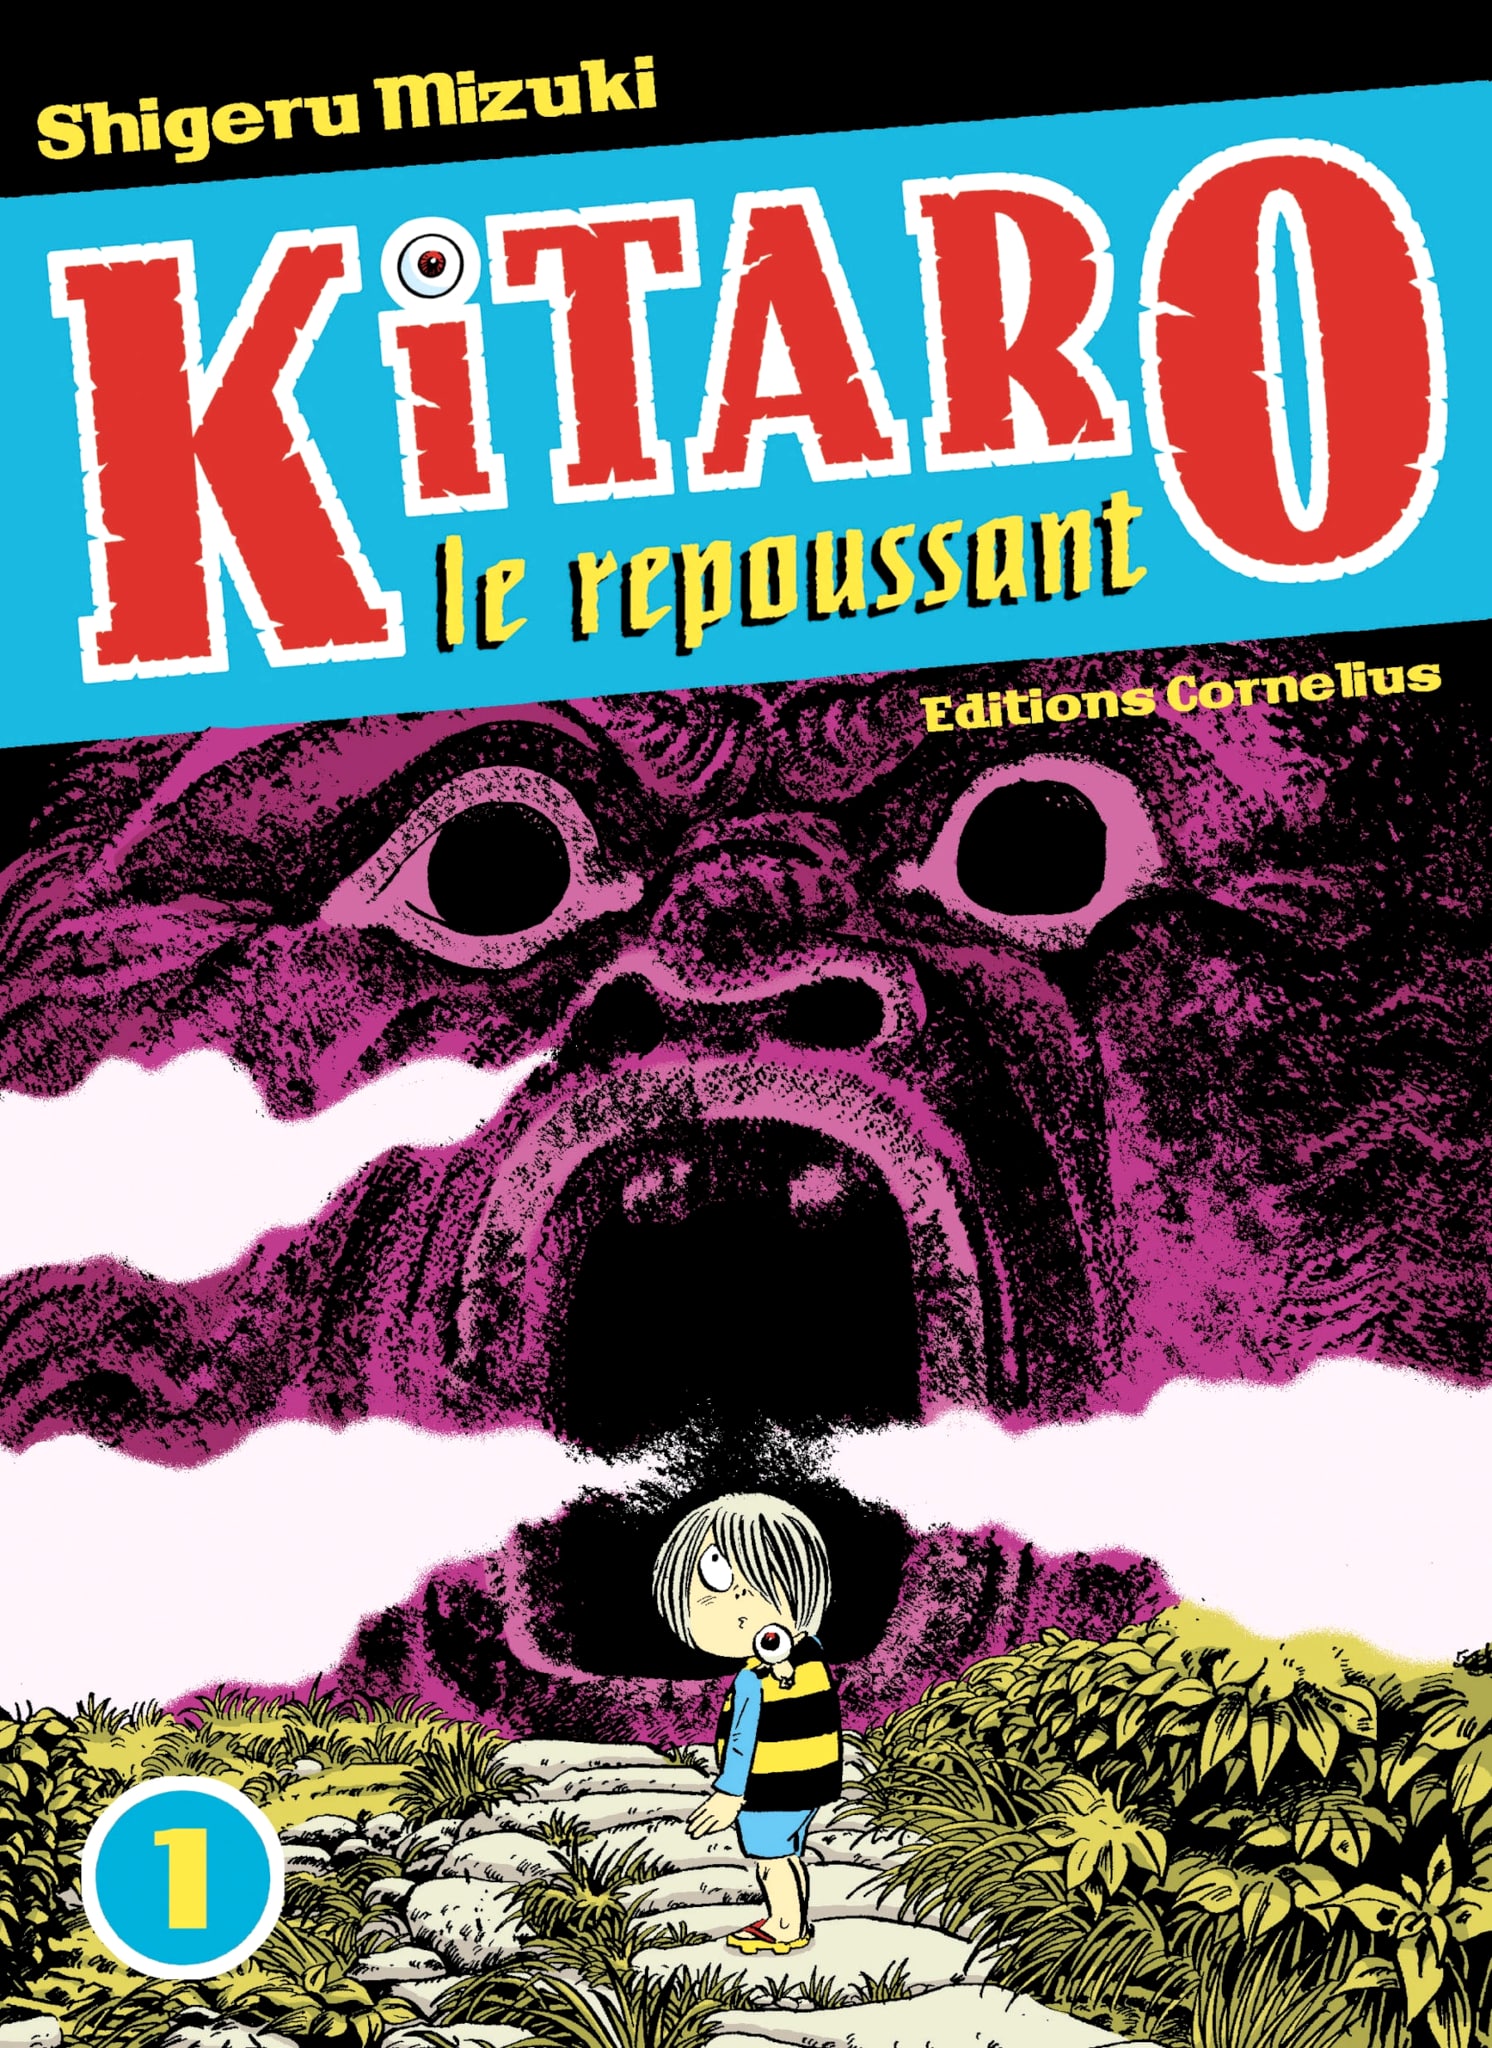 Tome 1 du manga Kitaro le repoussant